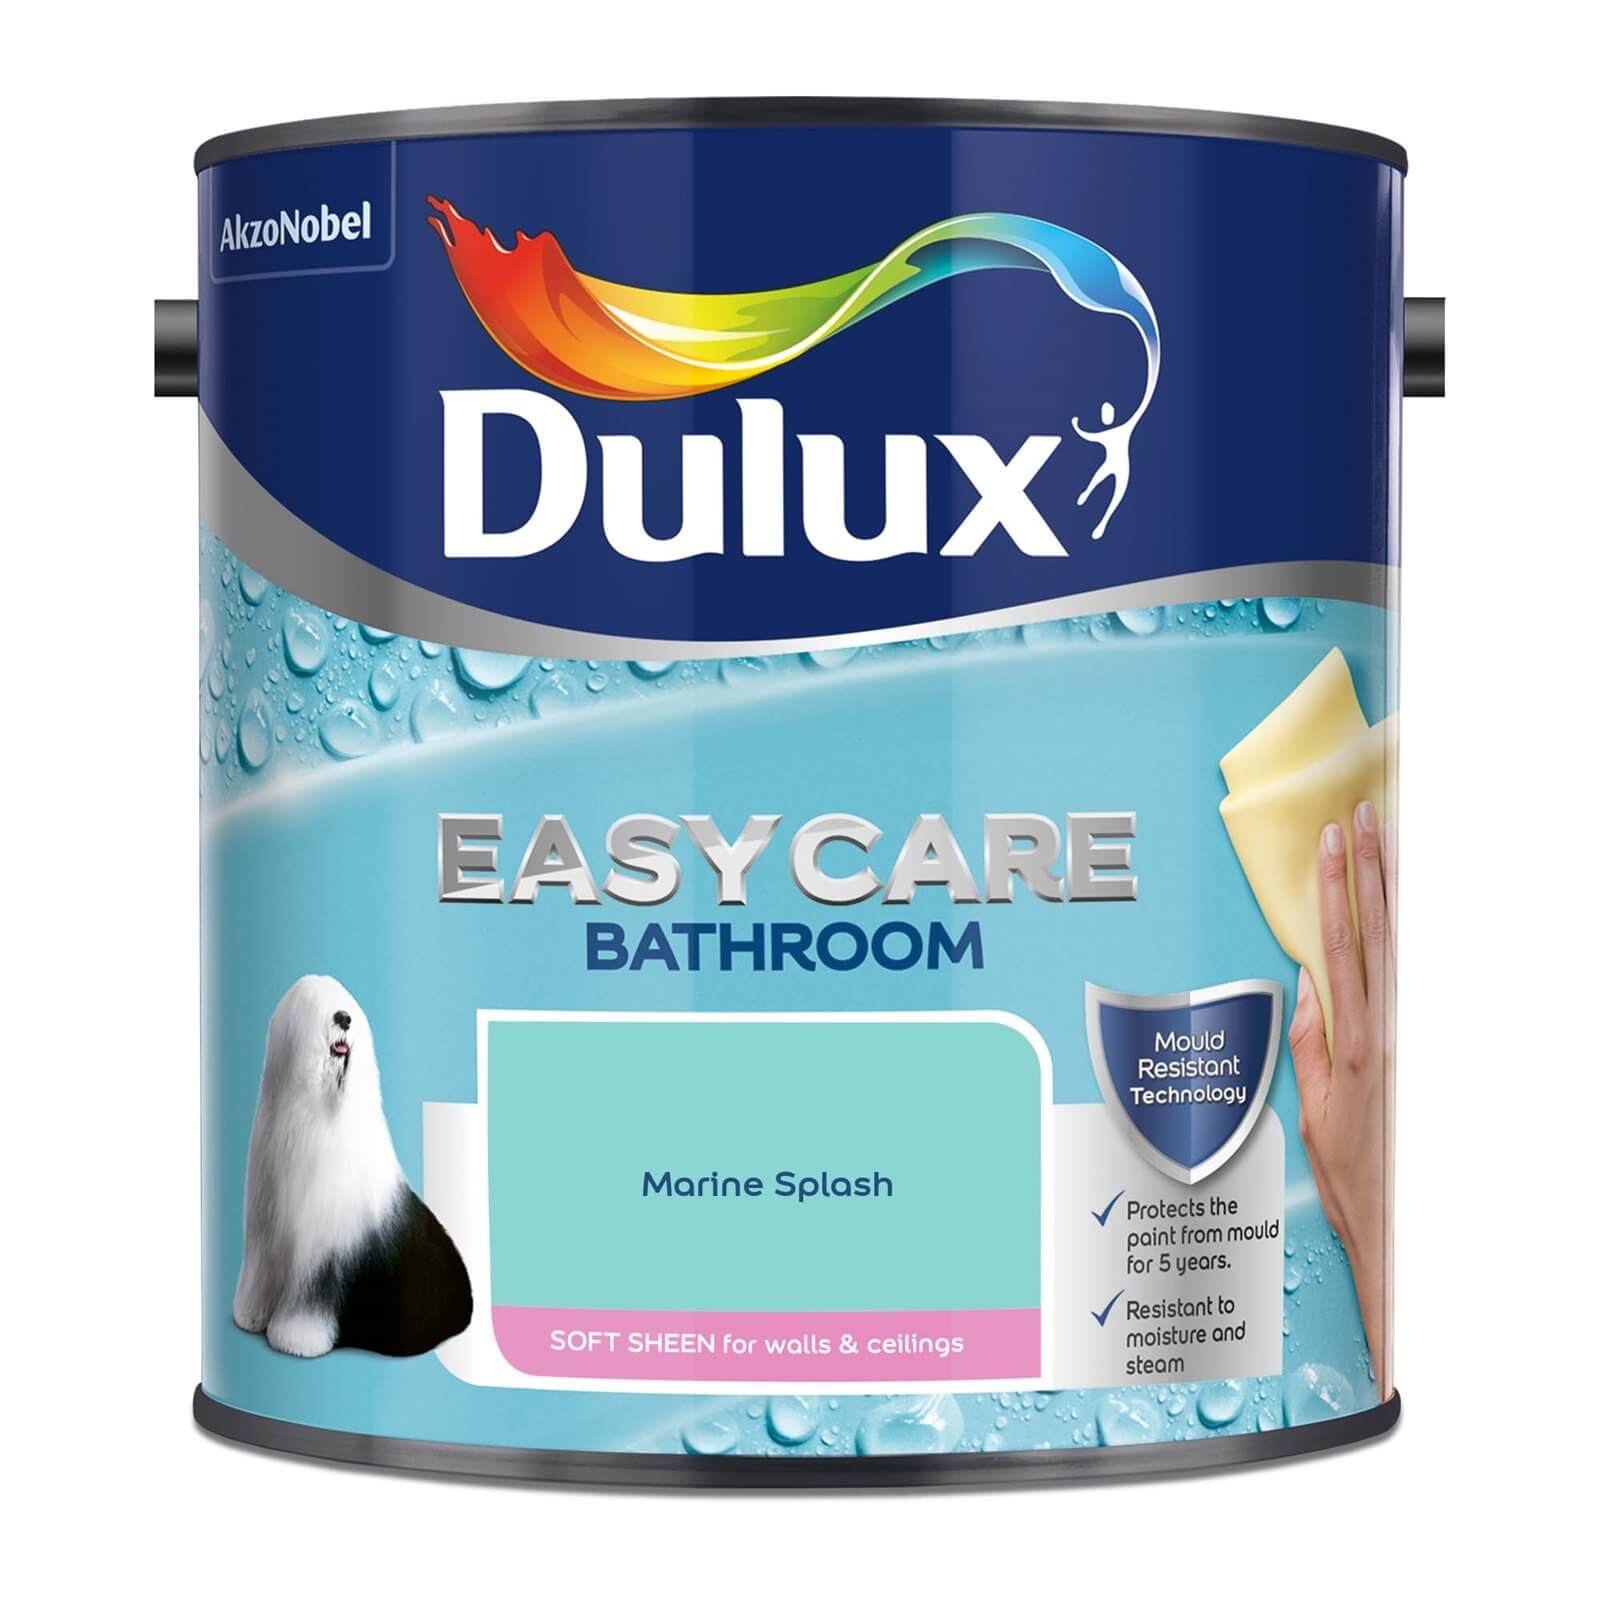 Dulux Easycare Bathroom Marine Splash Soft Sheen Paint - 2.5L